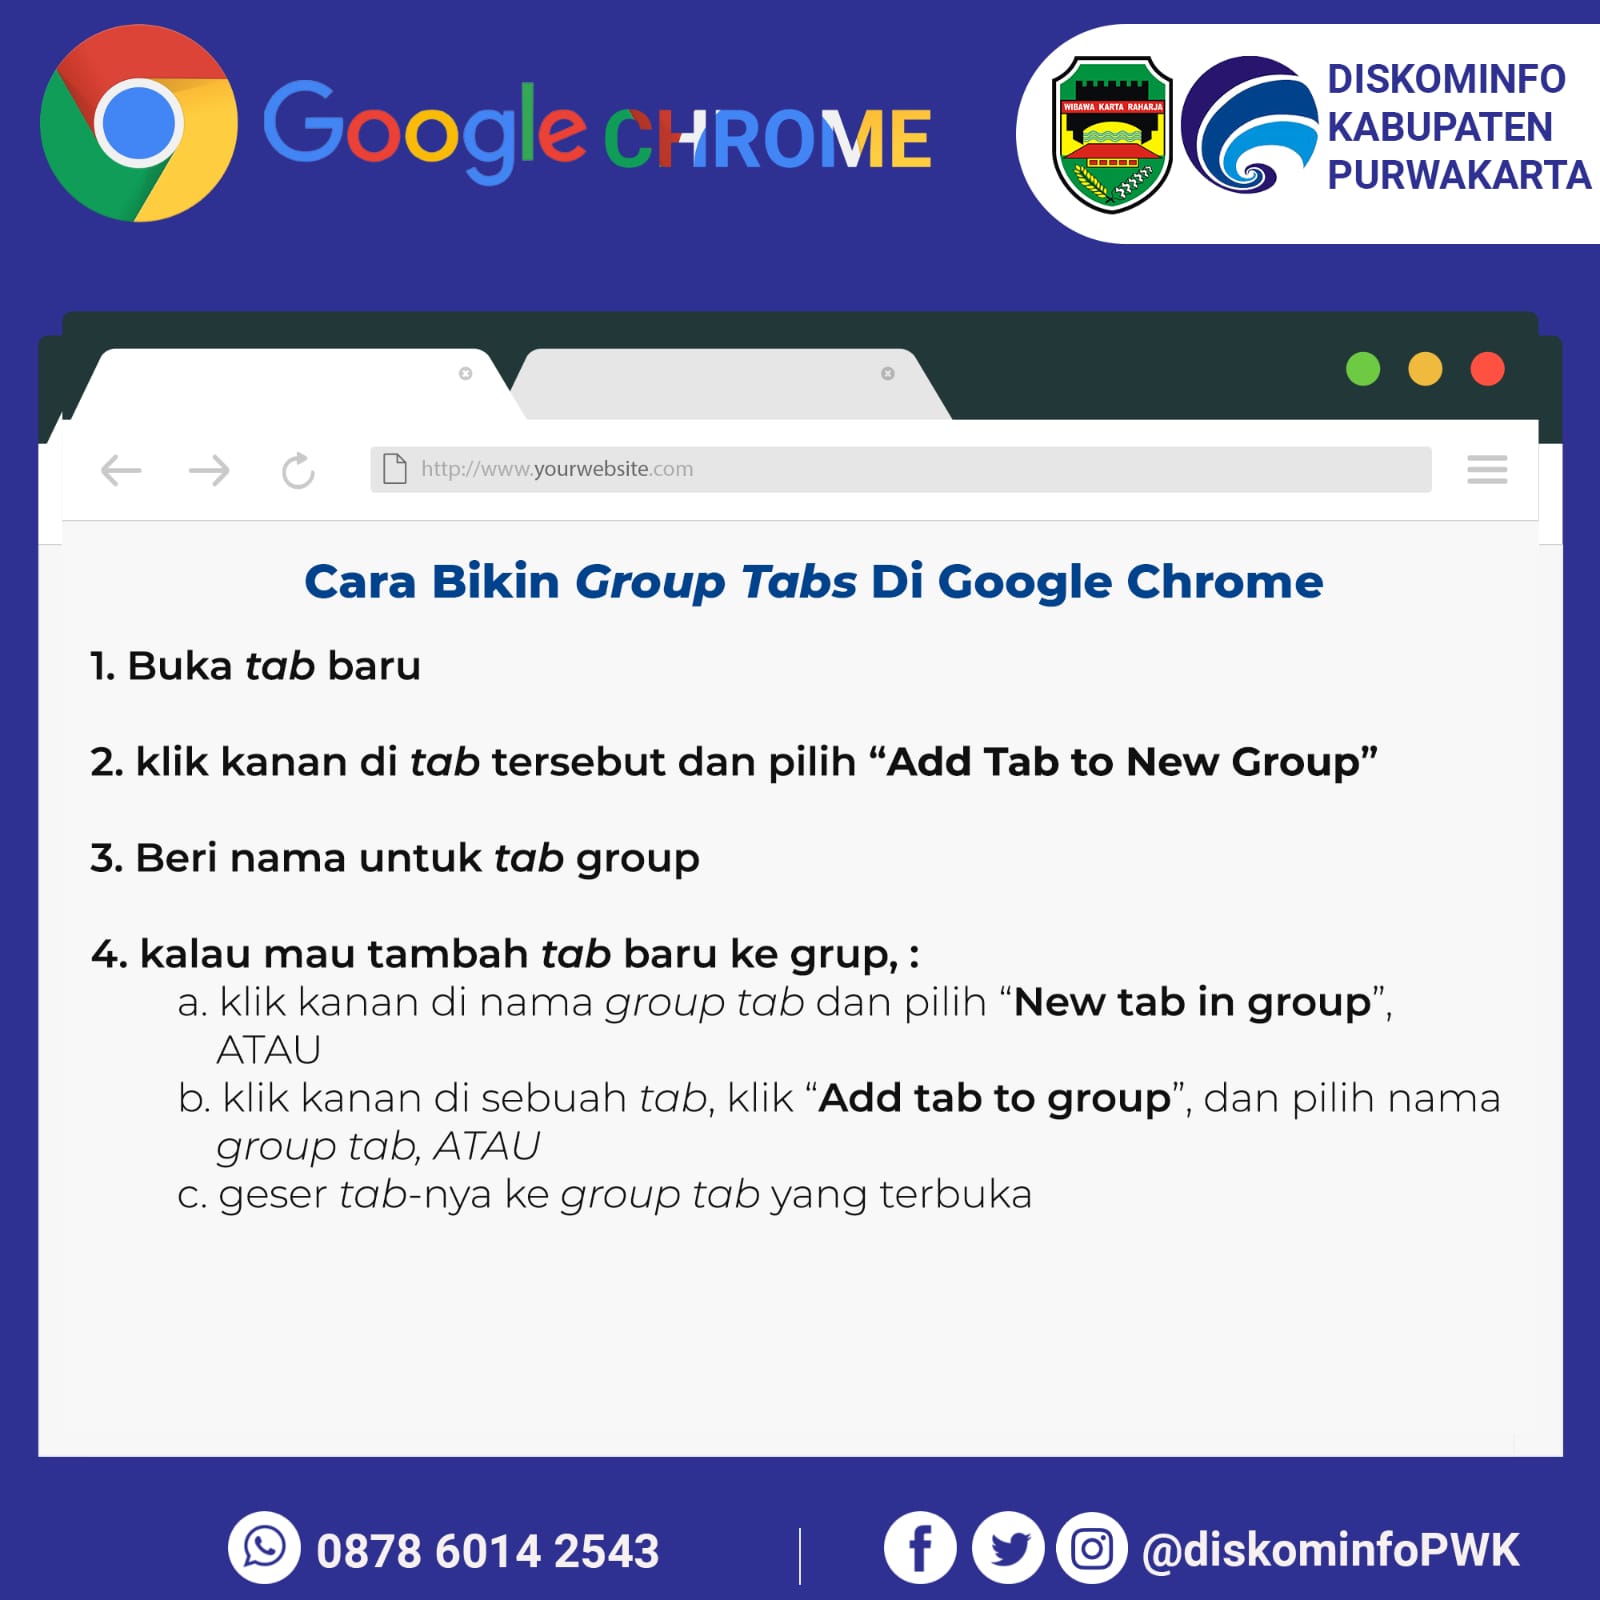 Cara bikin Group Tabs di Google Chrome